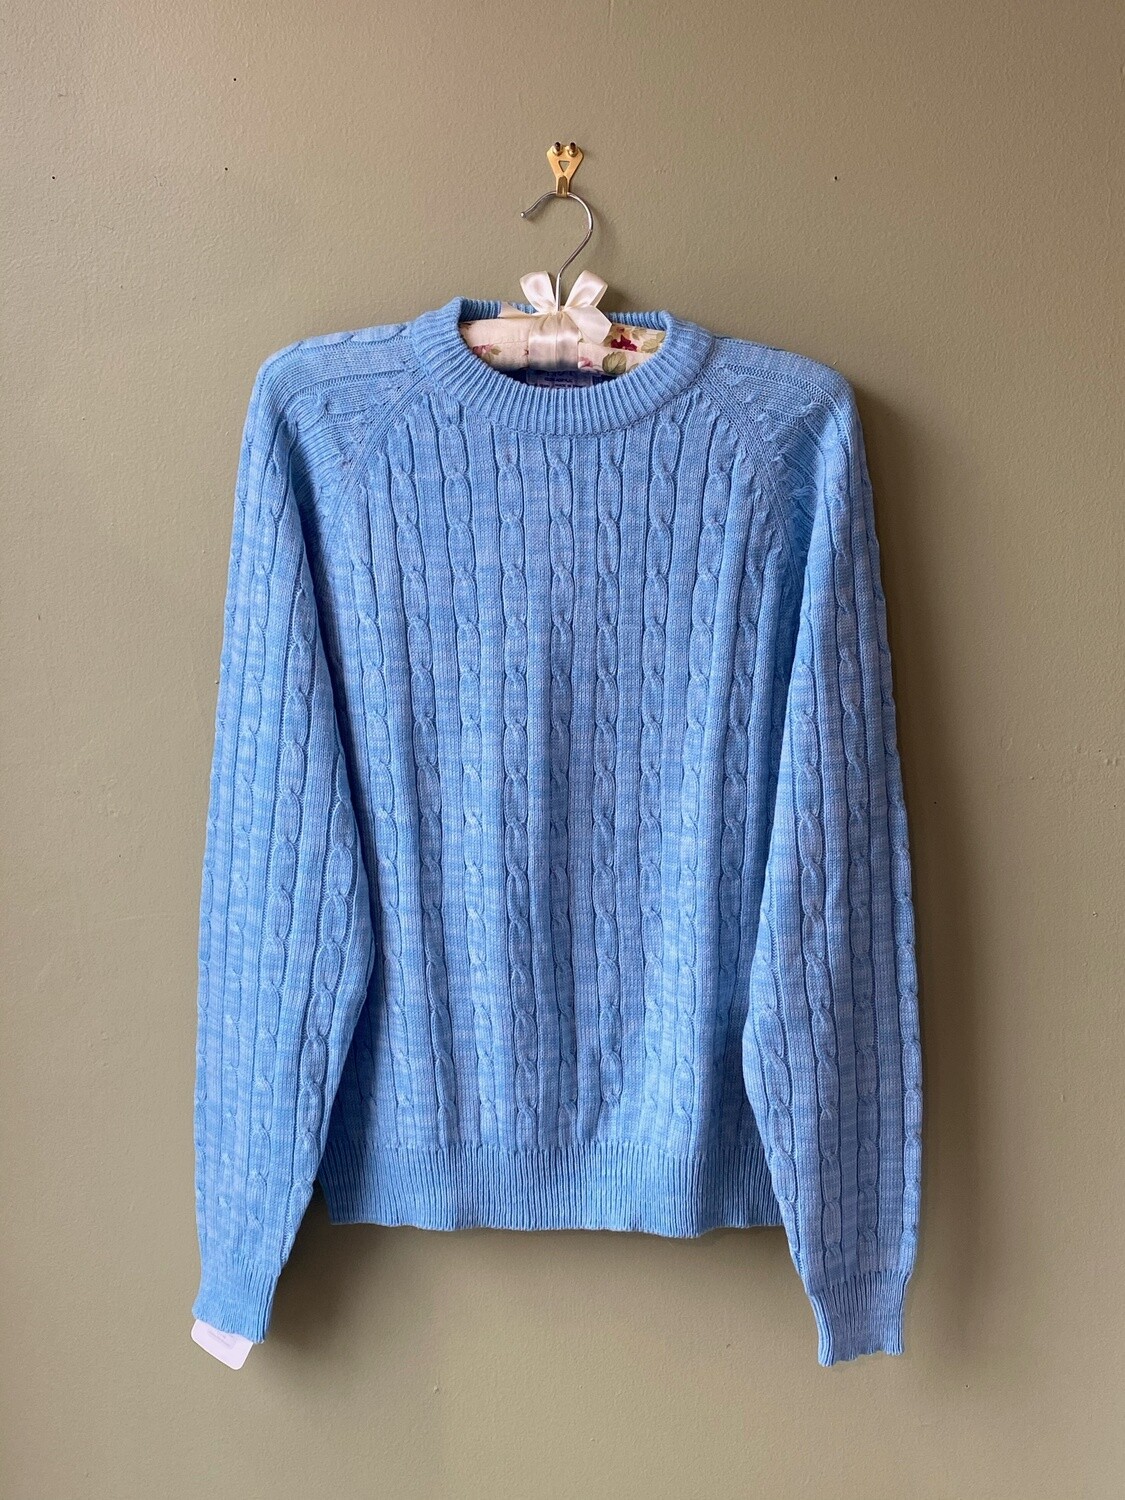 Vintage Blue Acrylic Sweater, The Ivy League, Size L